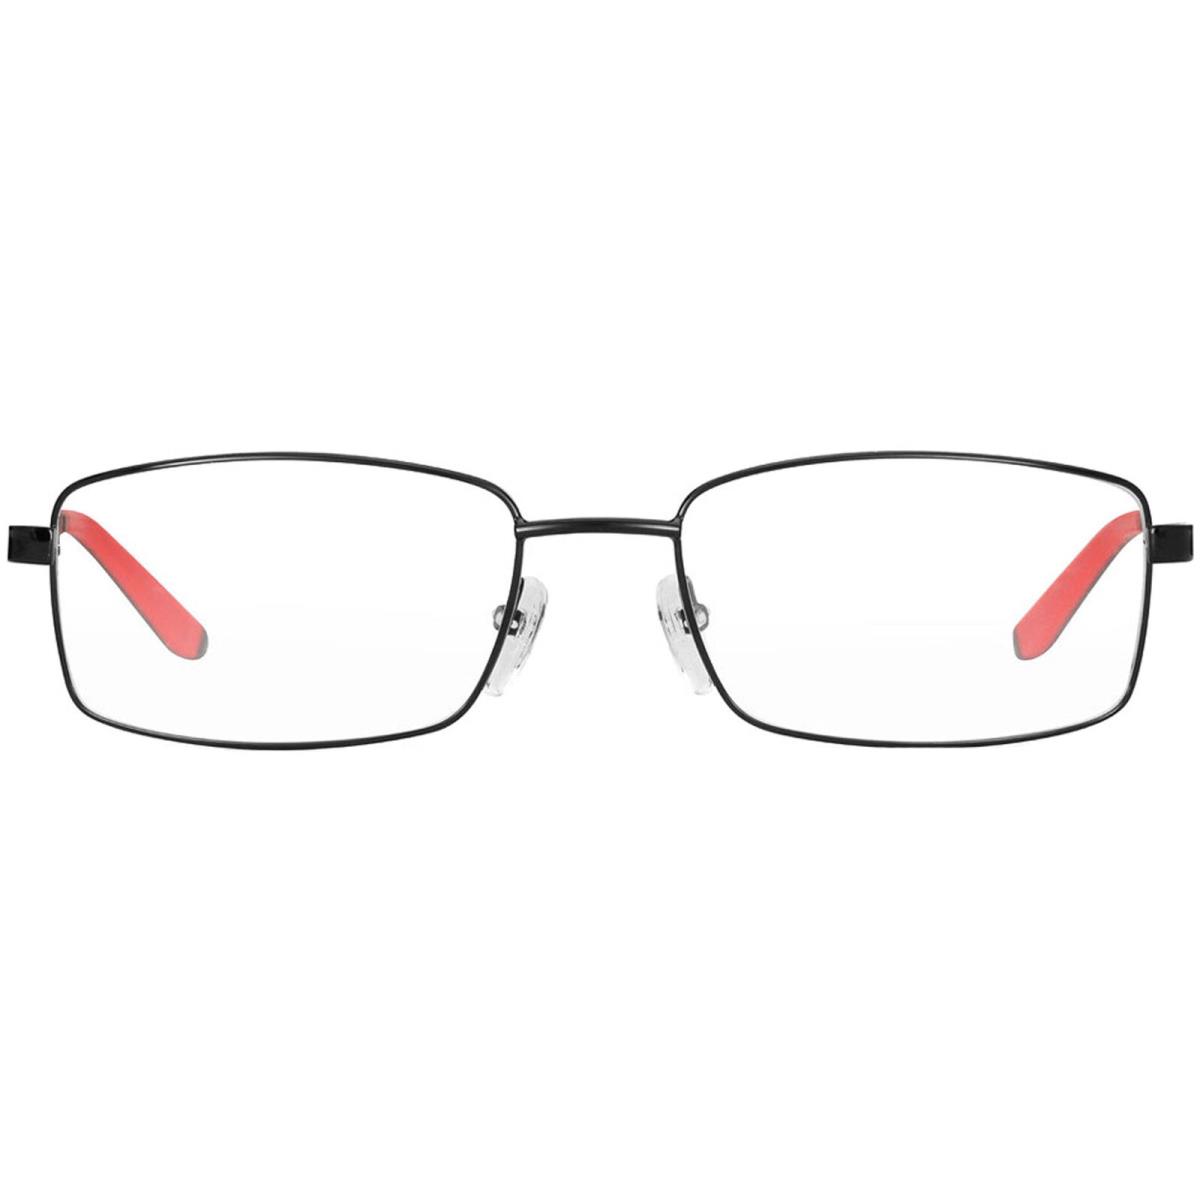 Carrera Men`s Eyeglasses Shiny Black Rectangular Shaped Frame Ca 8812 0006 00